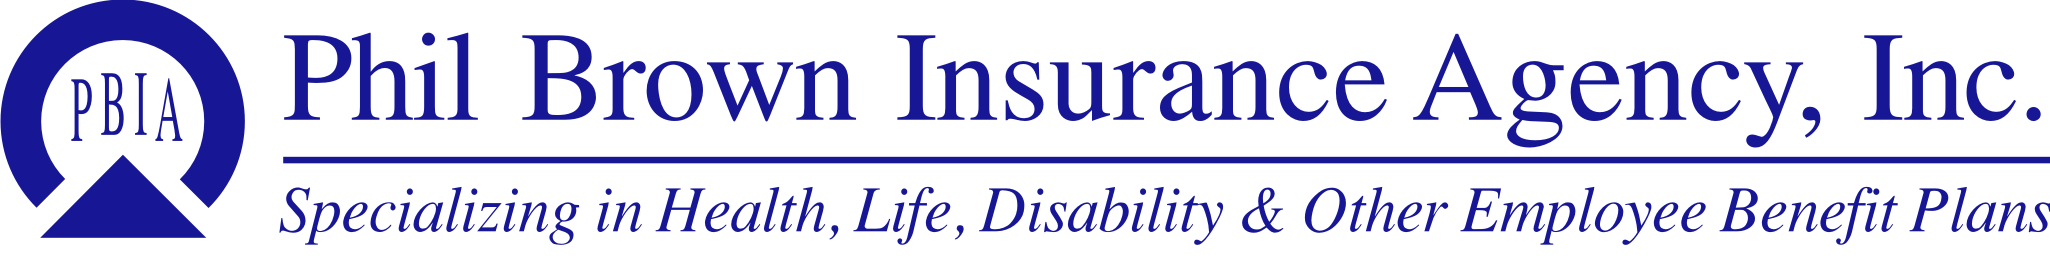 Phil Brown Insurance Agency